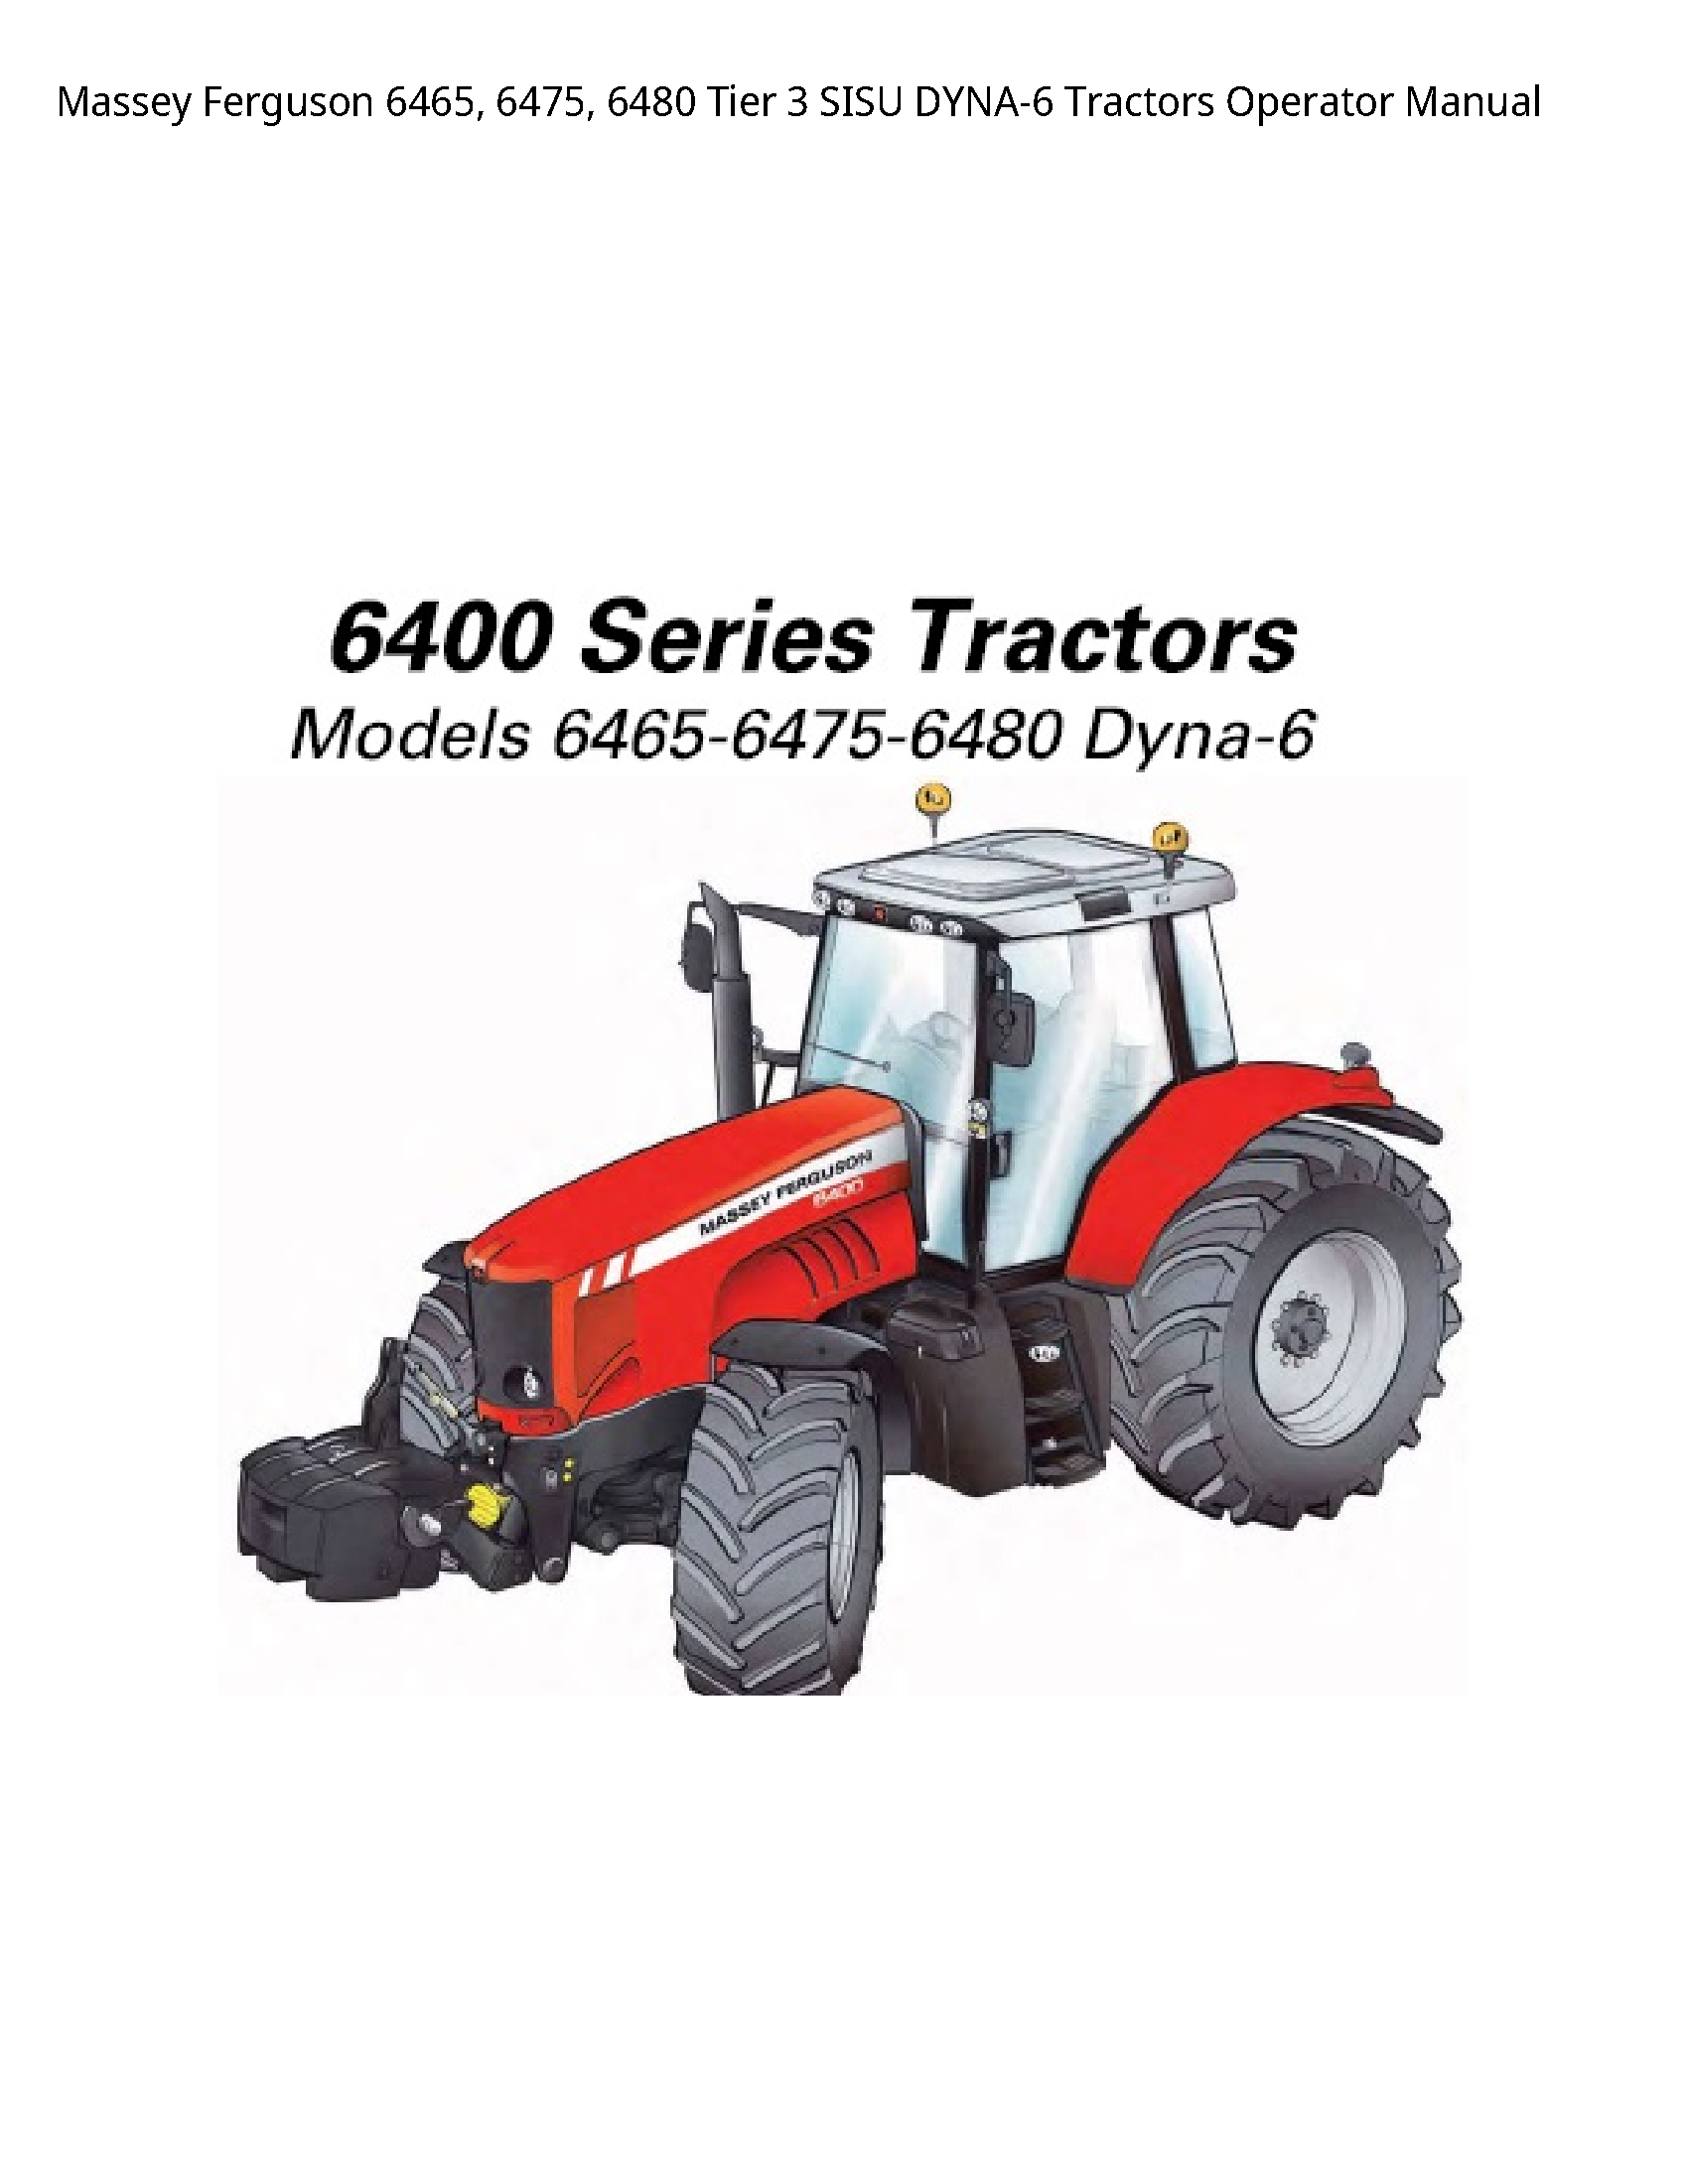 Massey Ferguson 6465 Tier SISU Tractors Operator manual